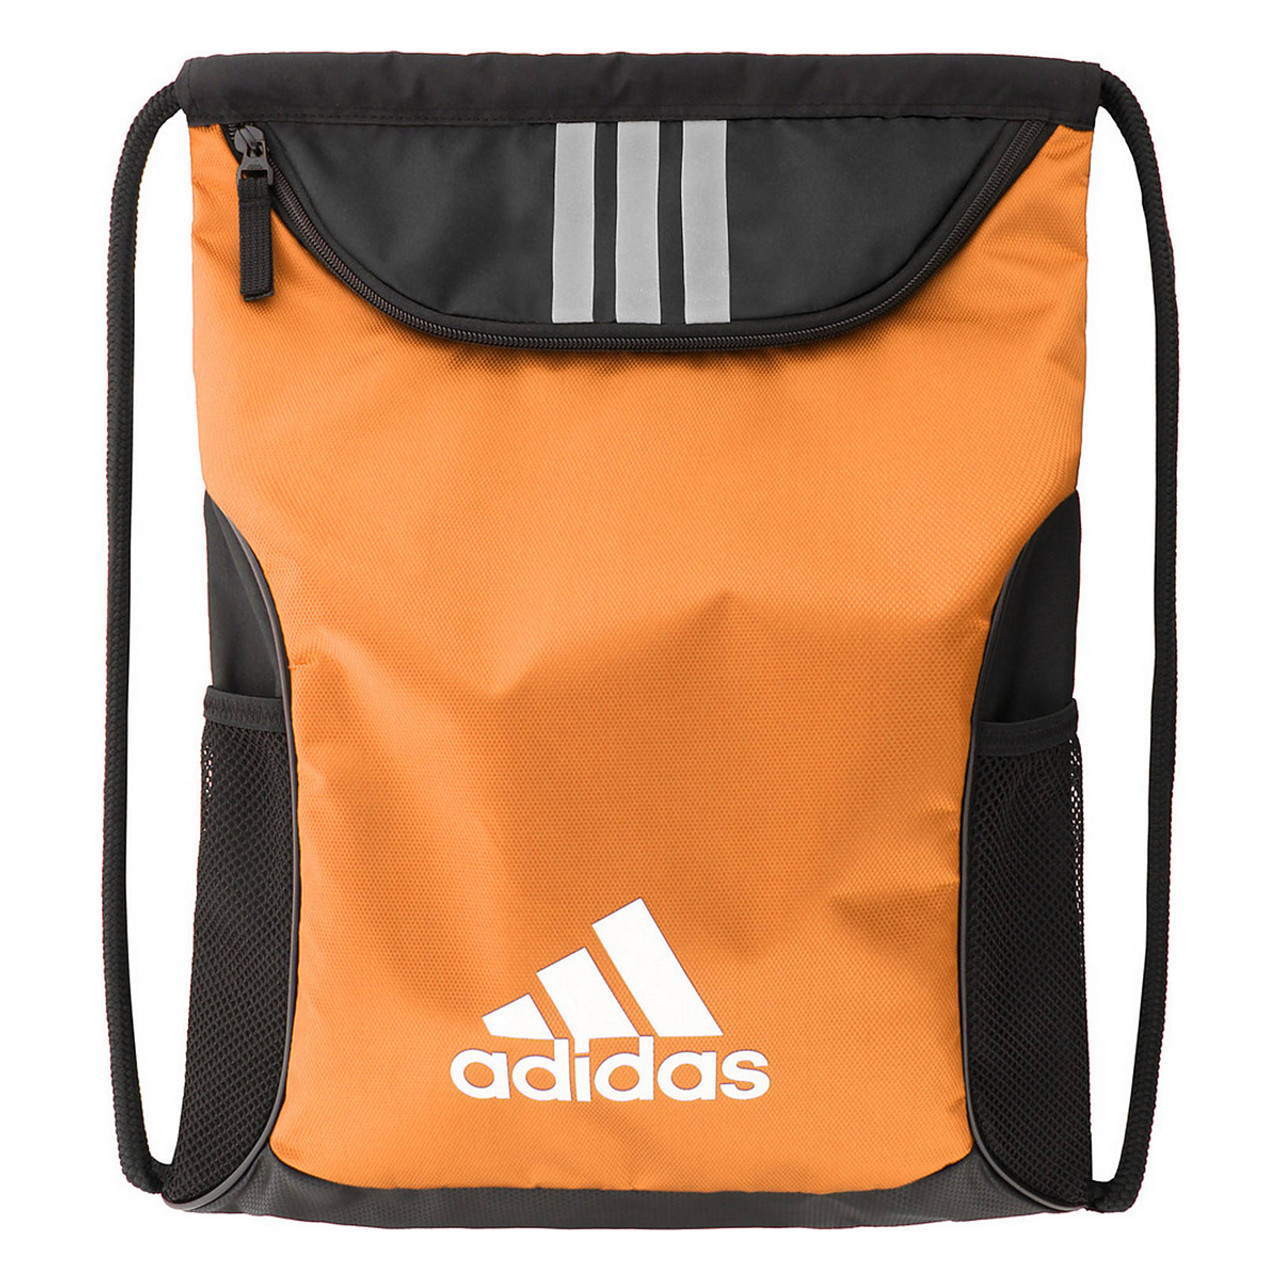 Adidas Team Issue II Sackpack - Various 